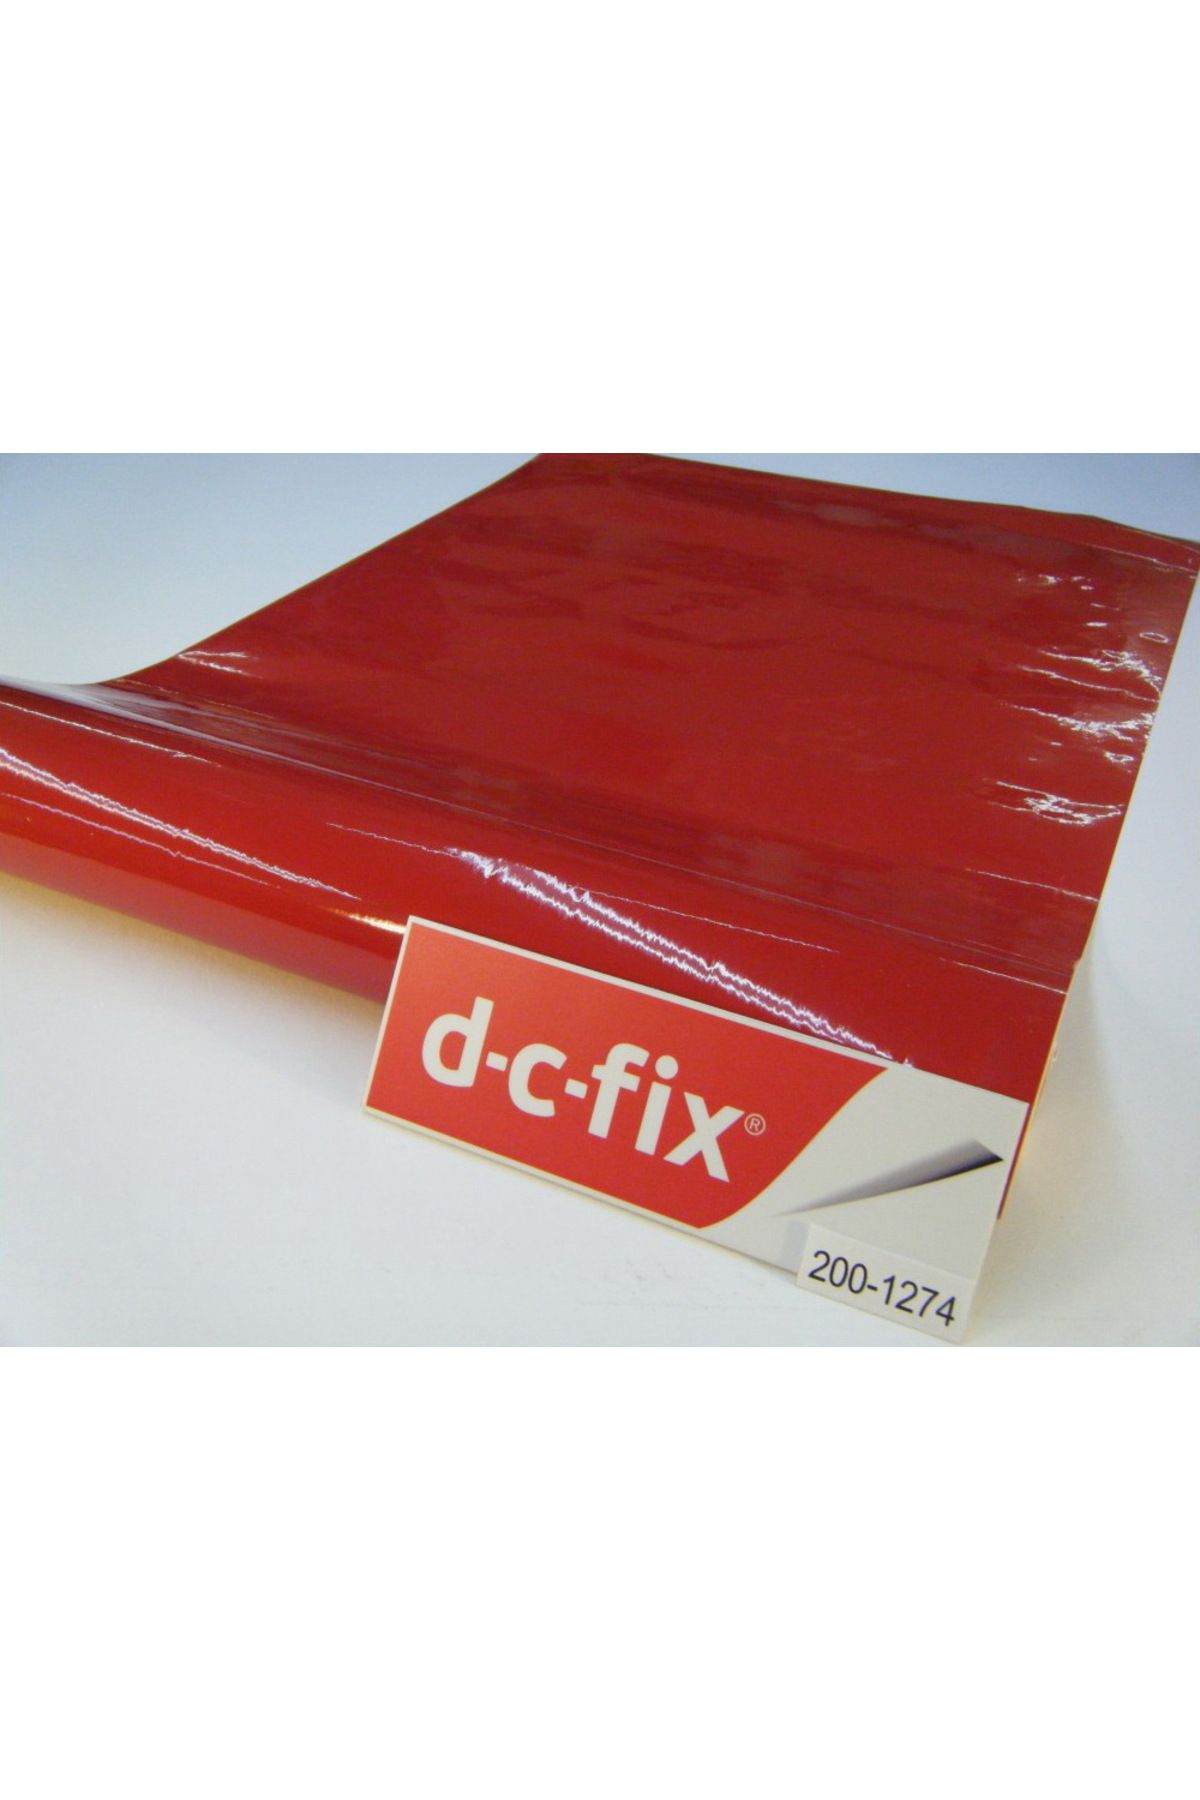 d-c-fix 200-1274 Düz Kırmızı Parlak Yapışkanlı Folyo